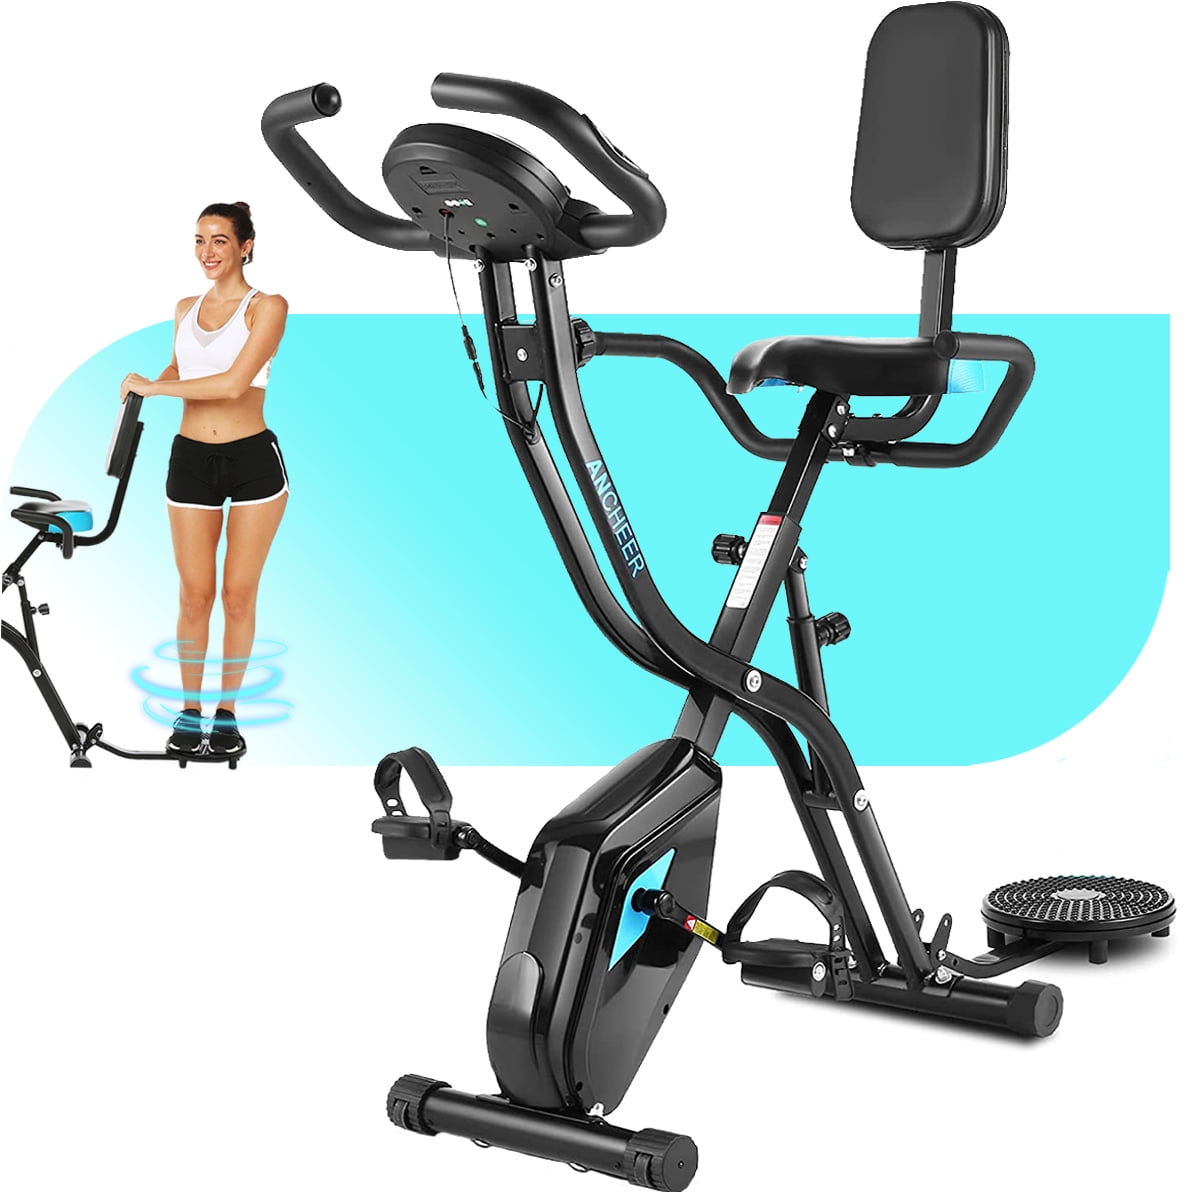 Pro Exercise Bike Fitness Cardio Workout Machine BLACK/BLUE 